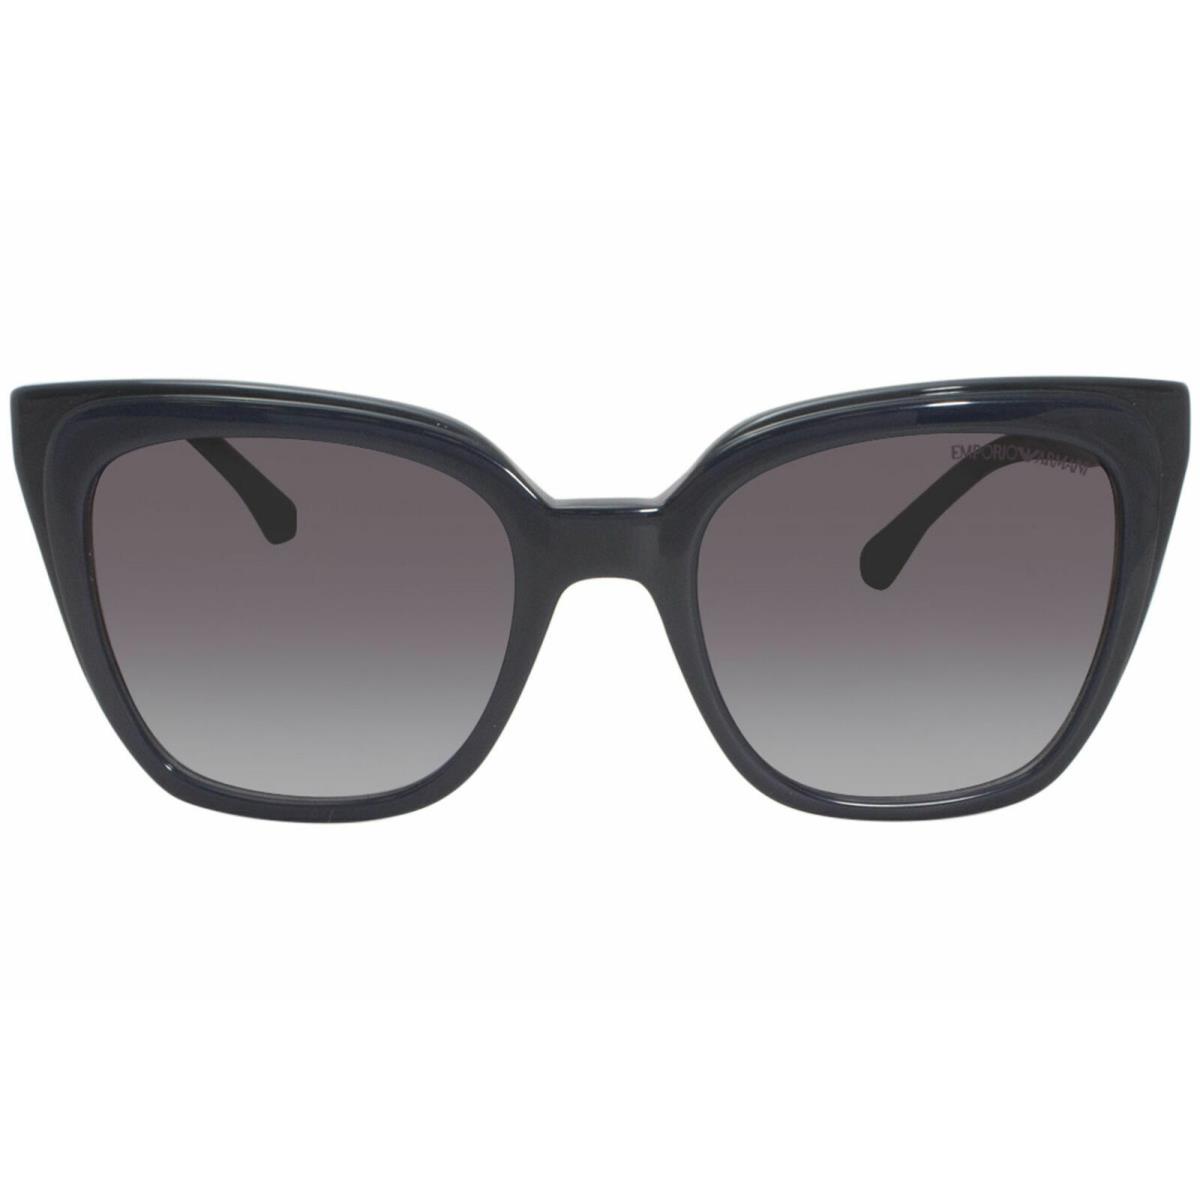 Giorgio Armani Sunglasses EA4127 57438G Black Frames Gray Lens 53mm ST